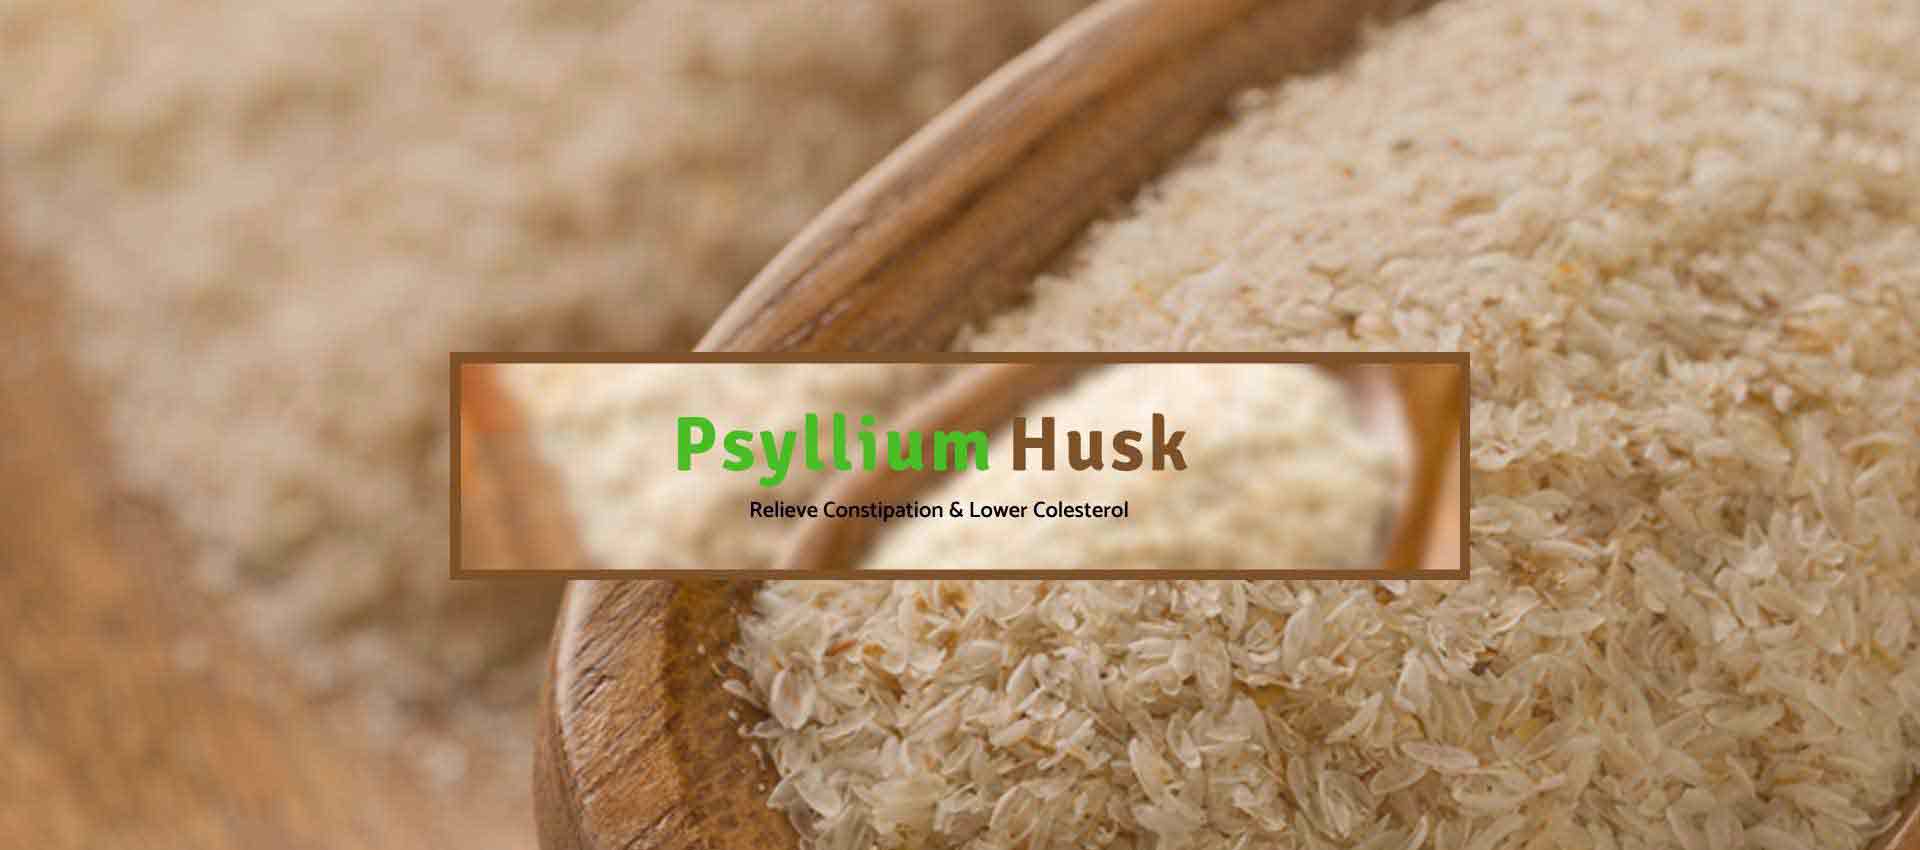 Psyllium Husk Manufacturers in Surat